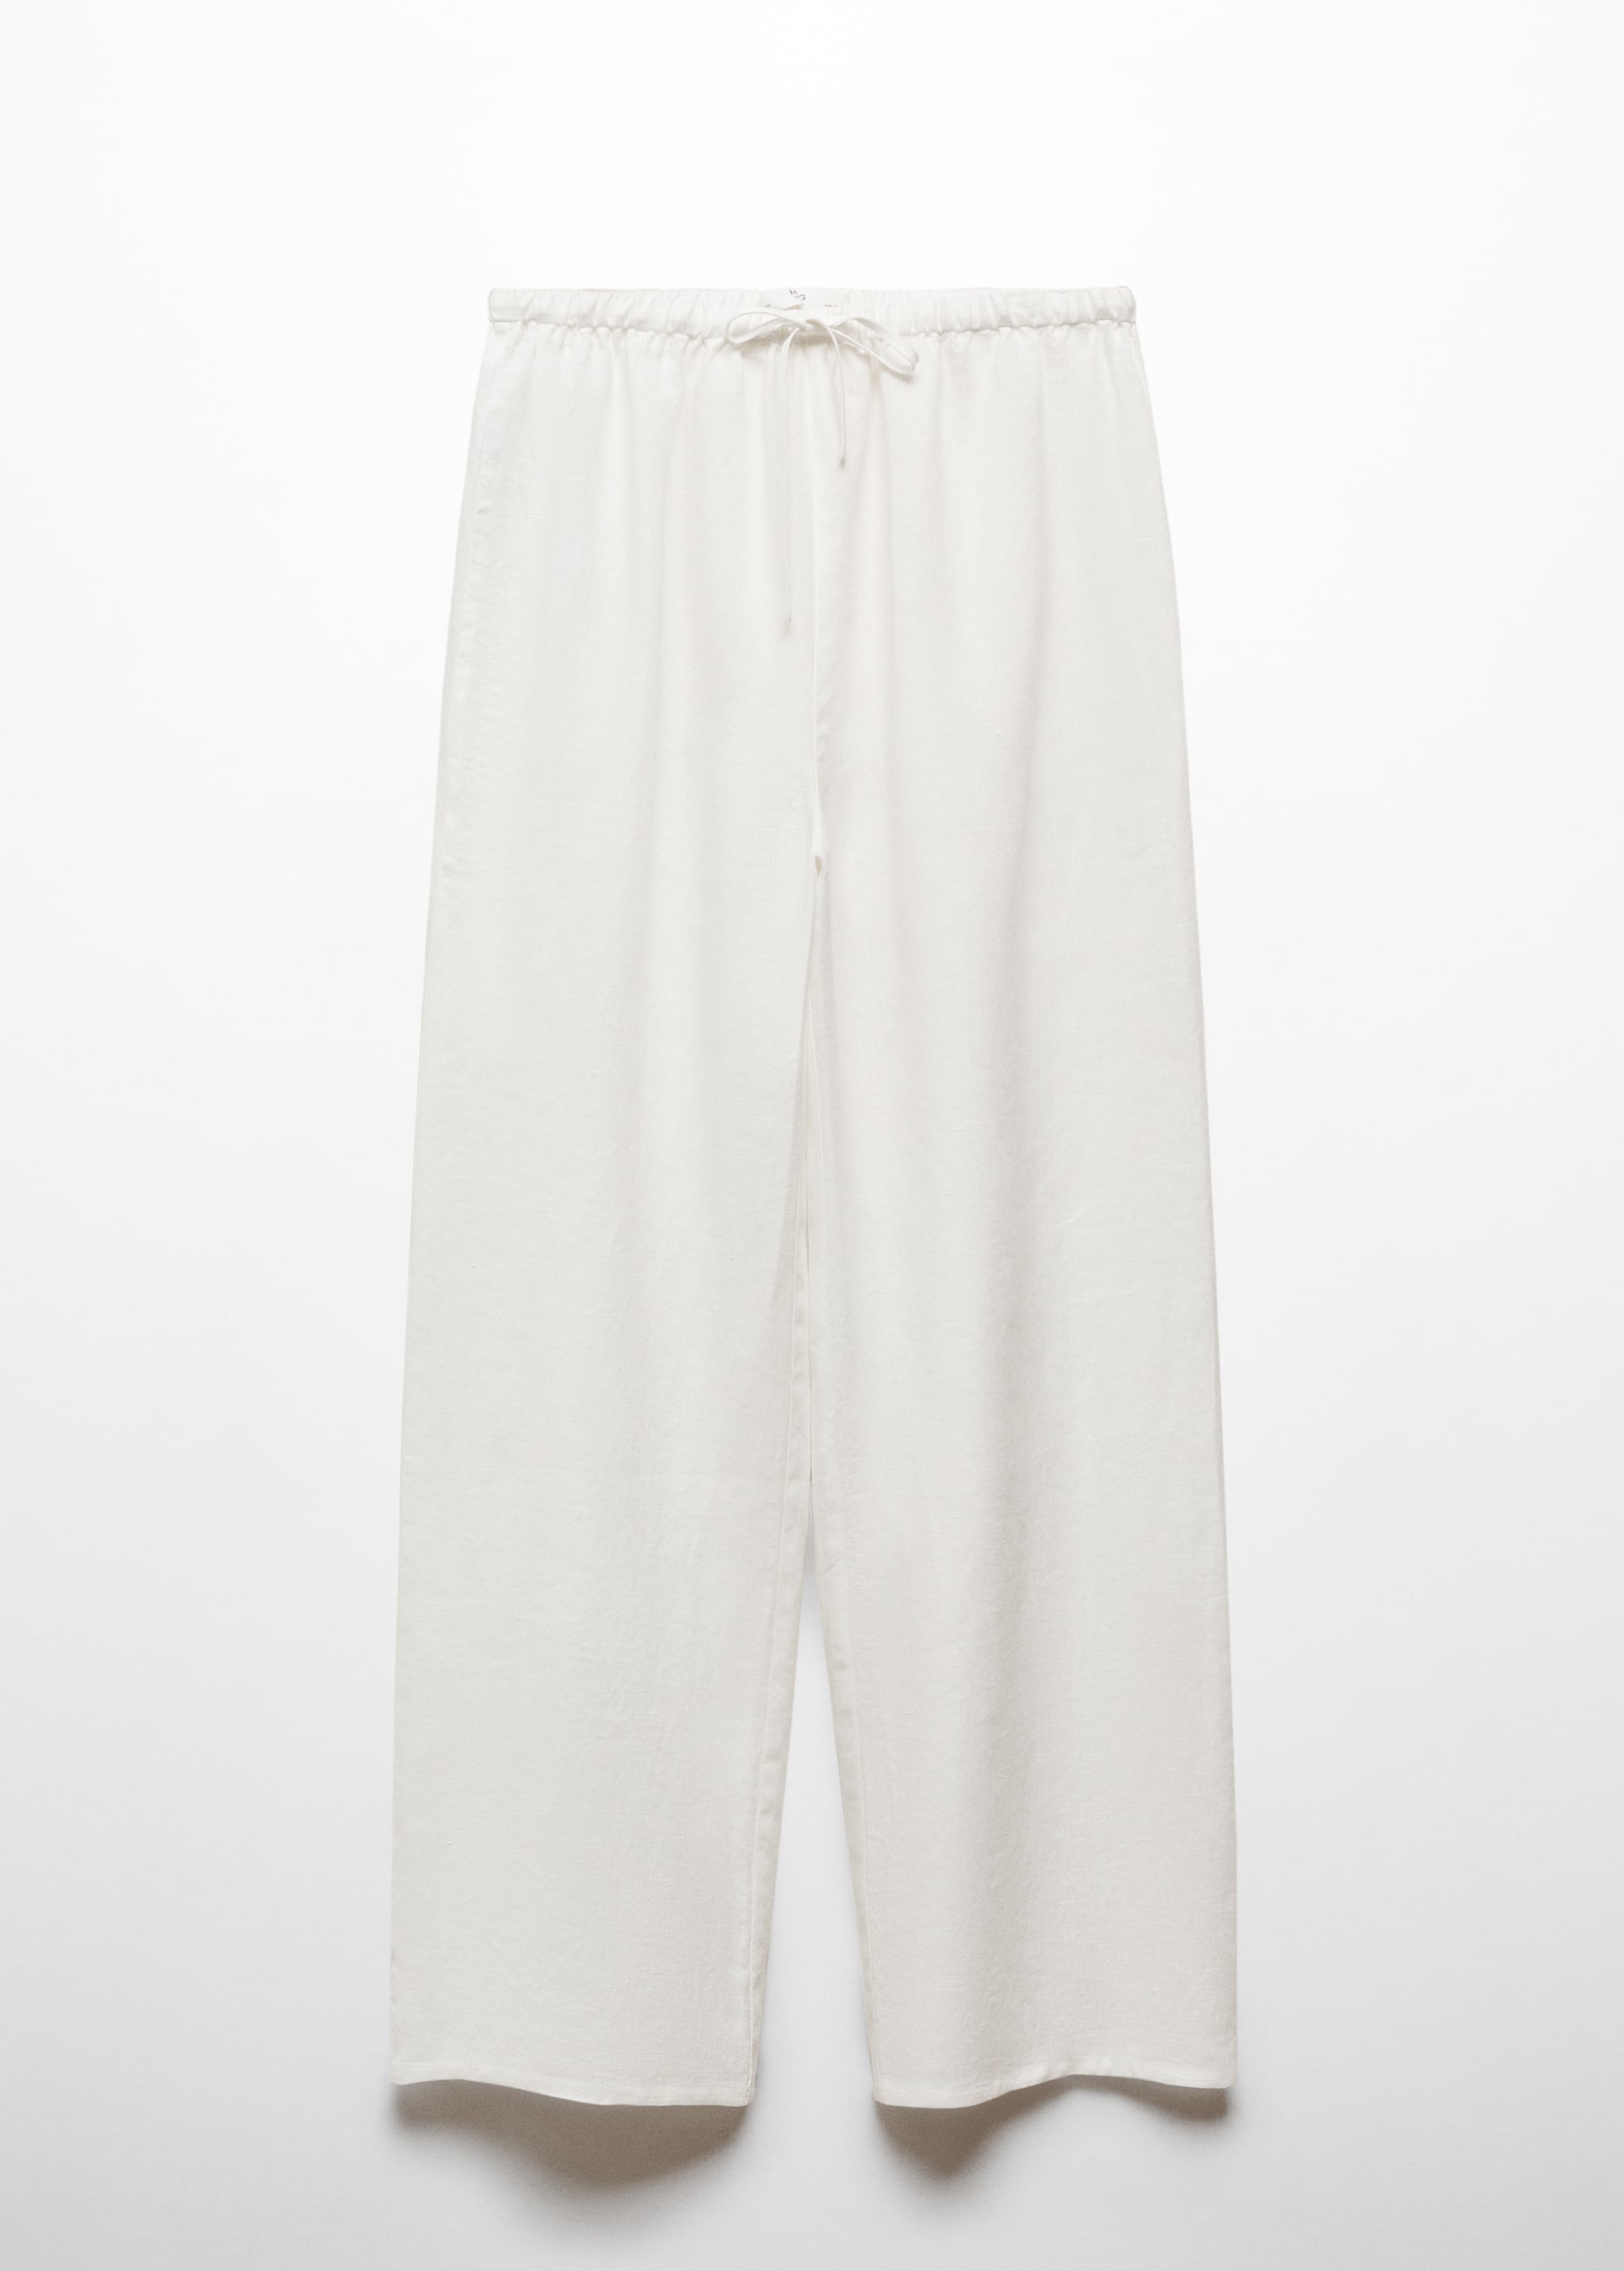 Pantalon pyjama 100 % lin - Article sans modèle